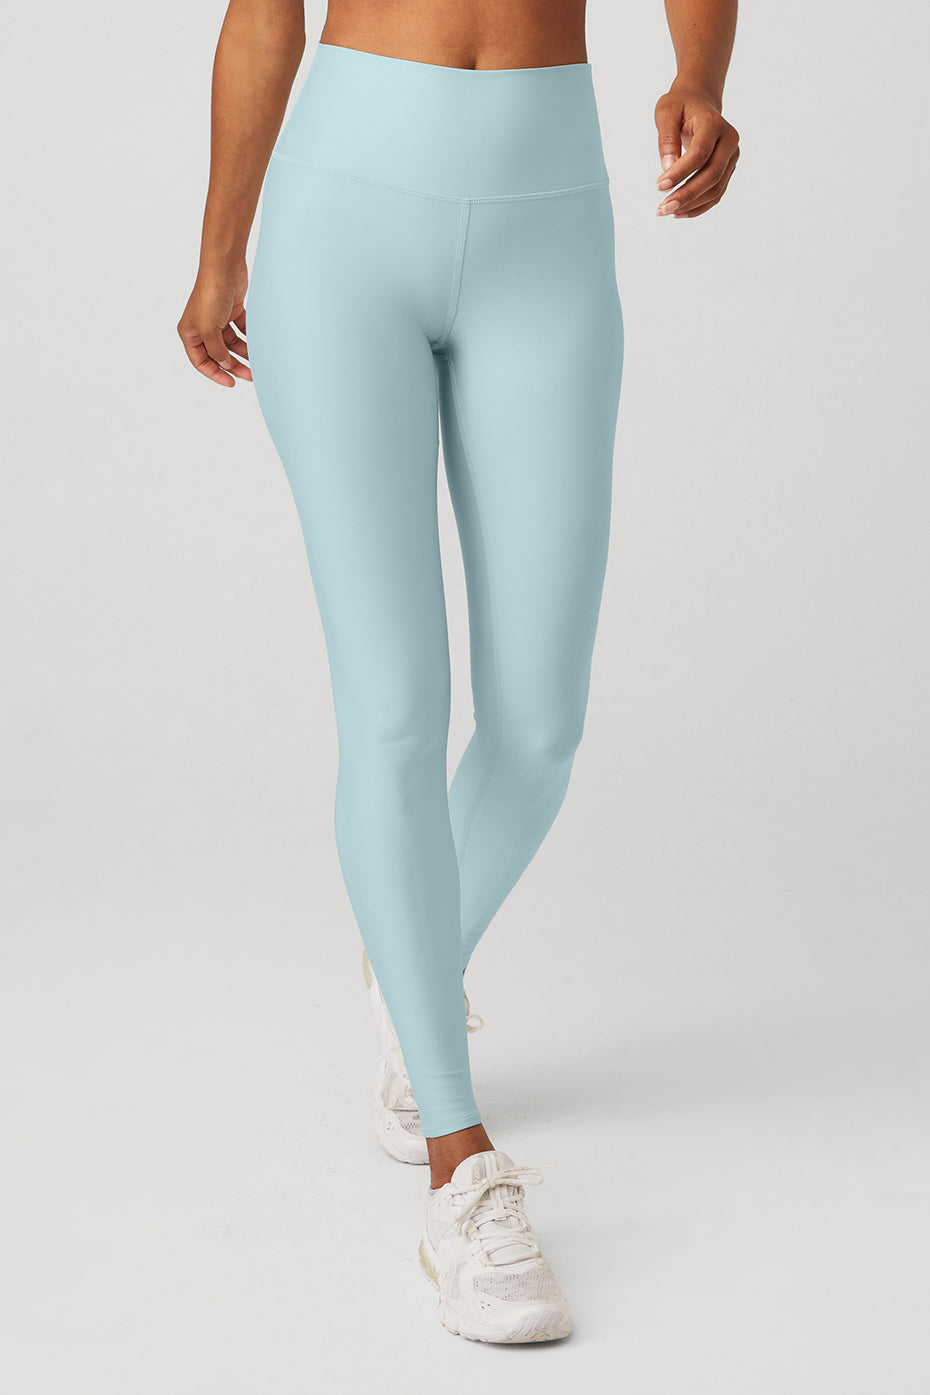 Women's Alo Yoga Pants from $78